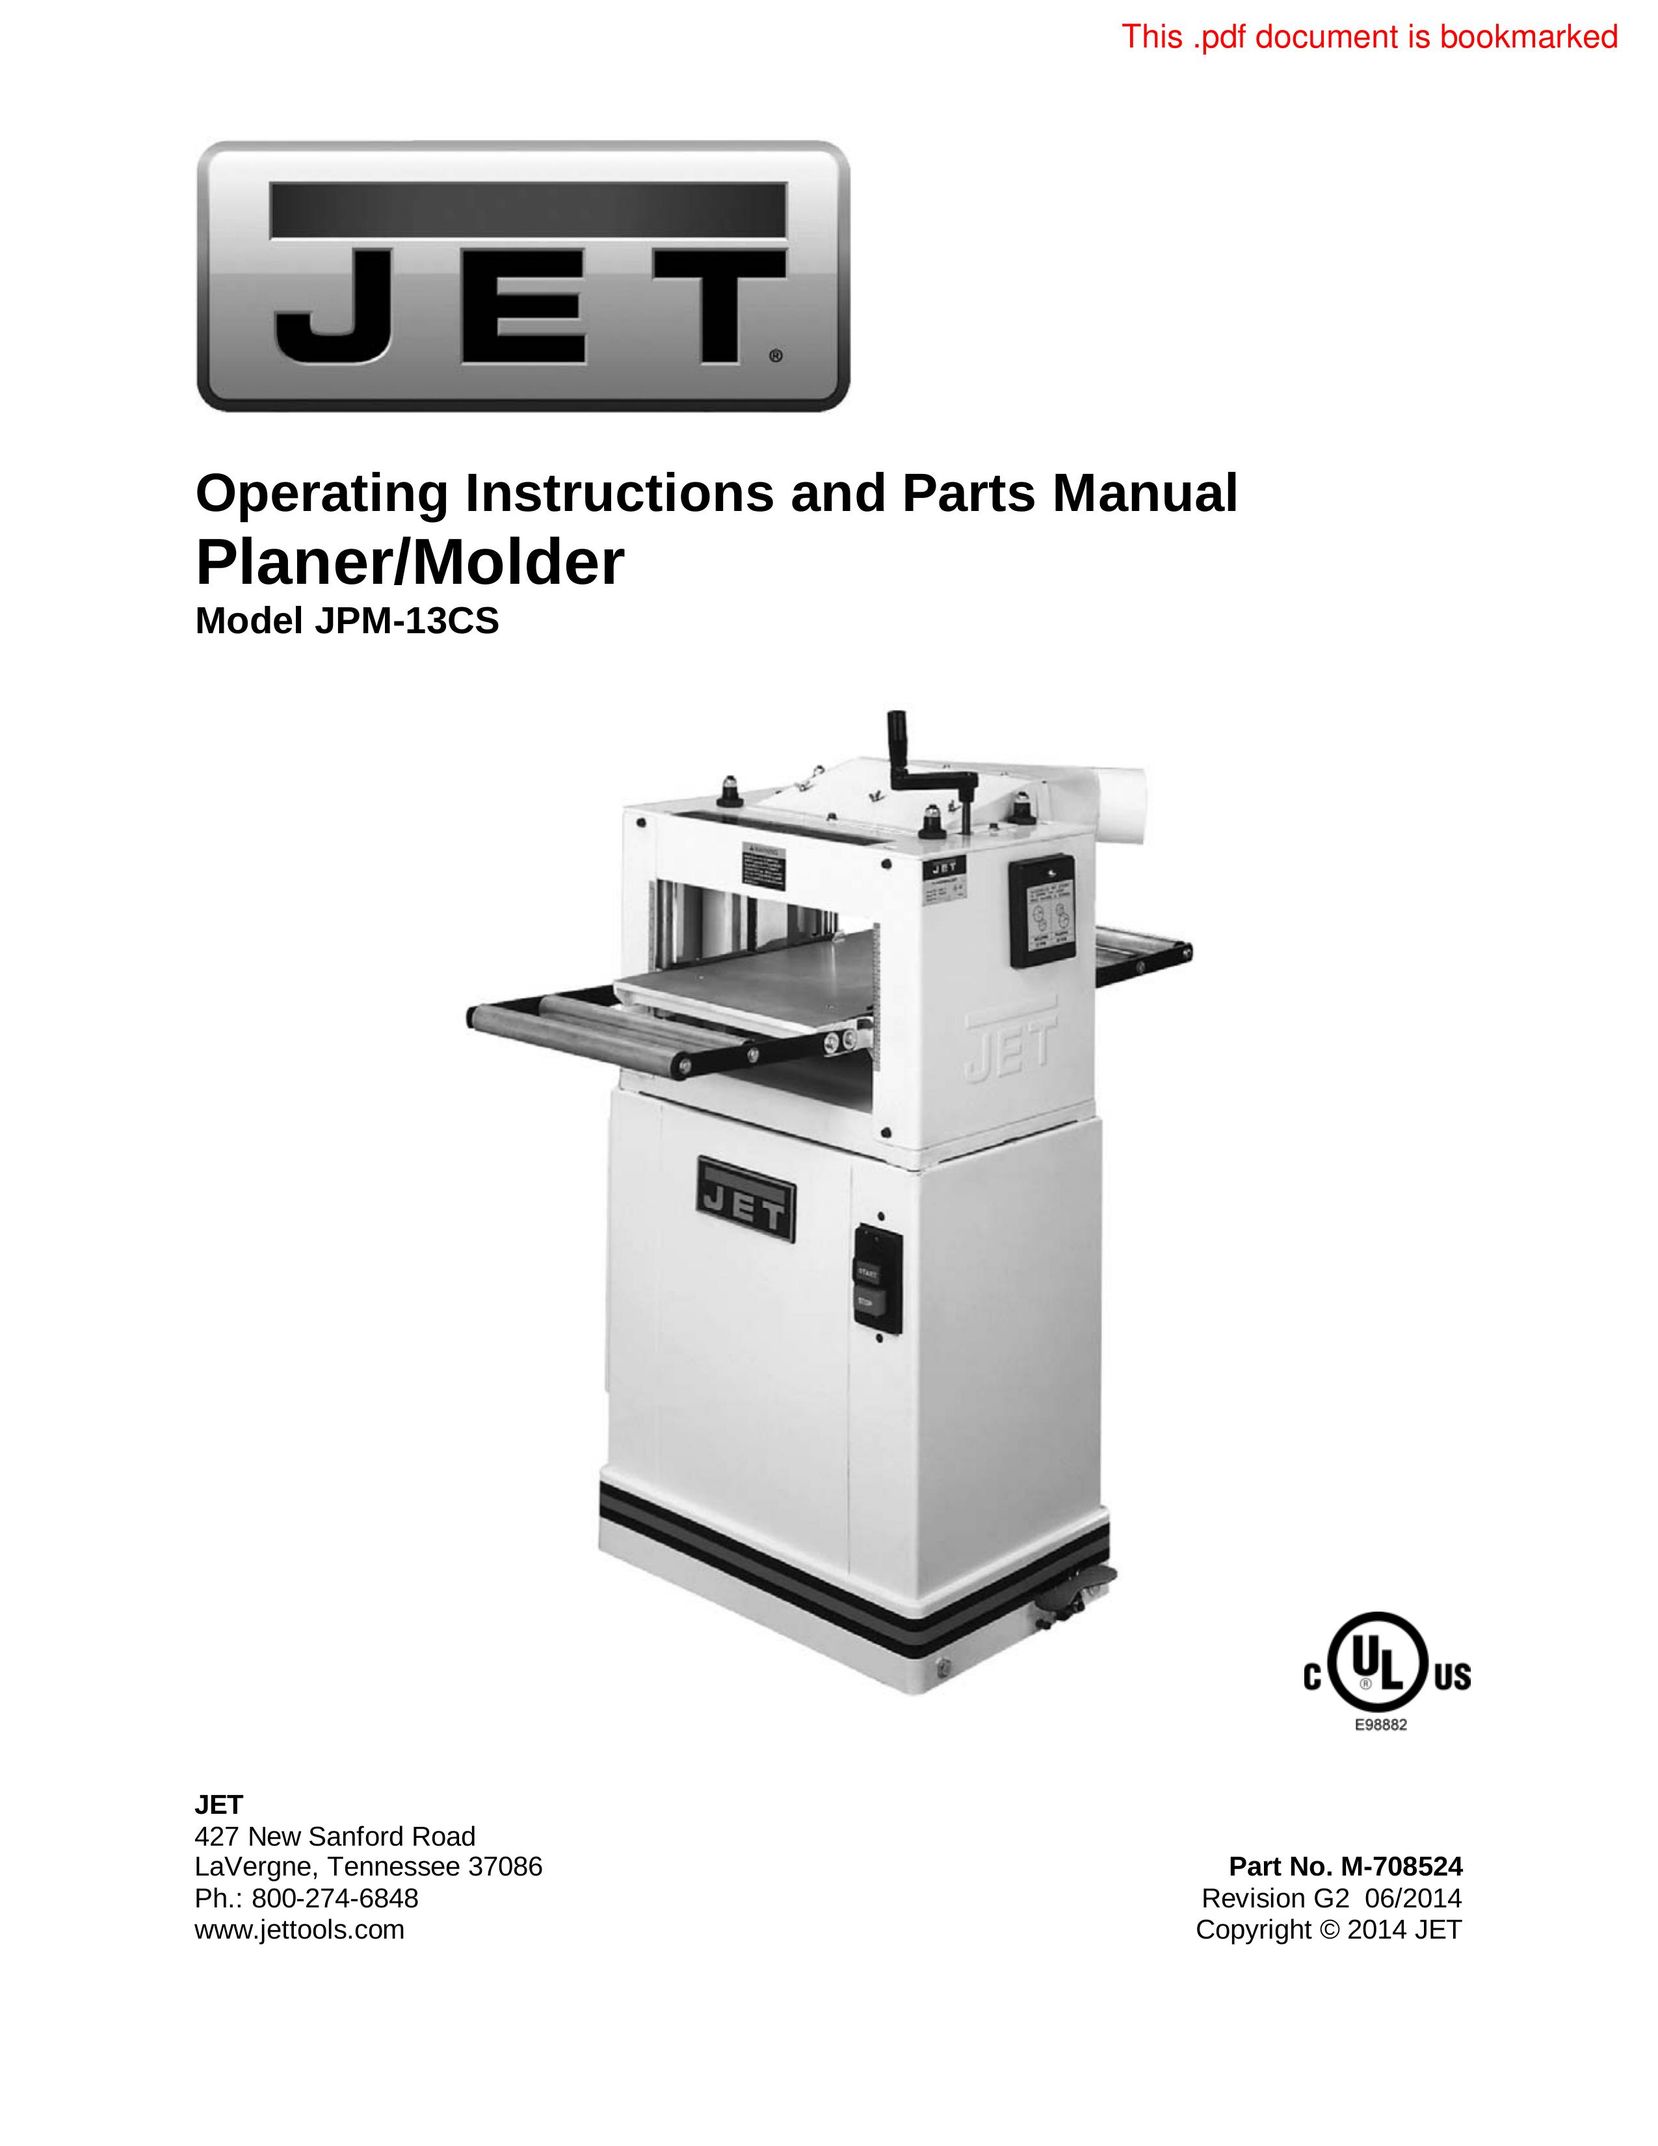 Jet Tools JPM-13CS Planer User Manual